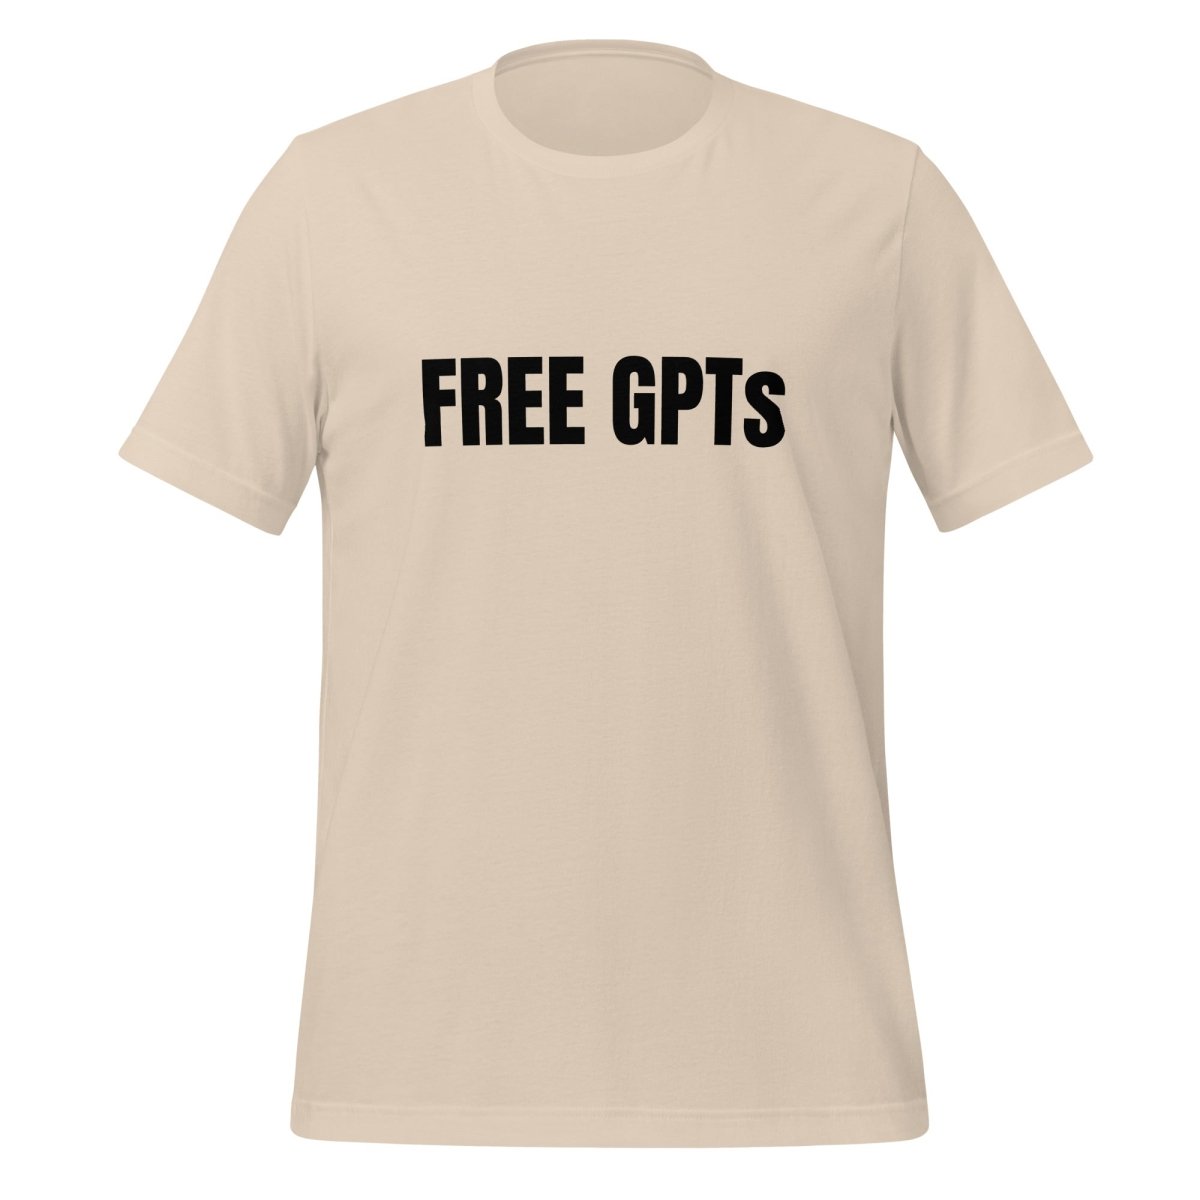 FREE GPTs T - Shirt (unisex) - Soft Cream - AI Store